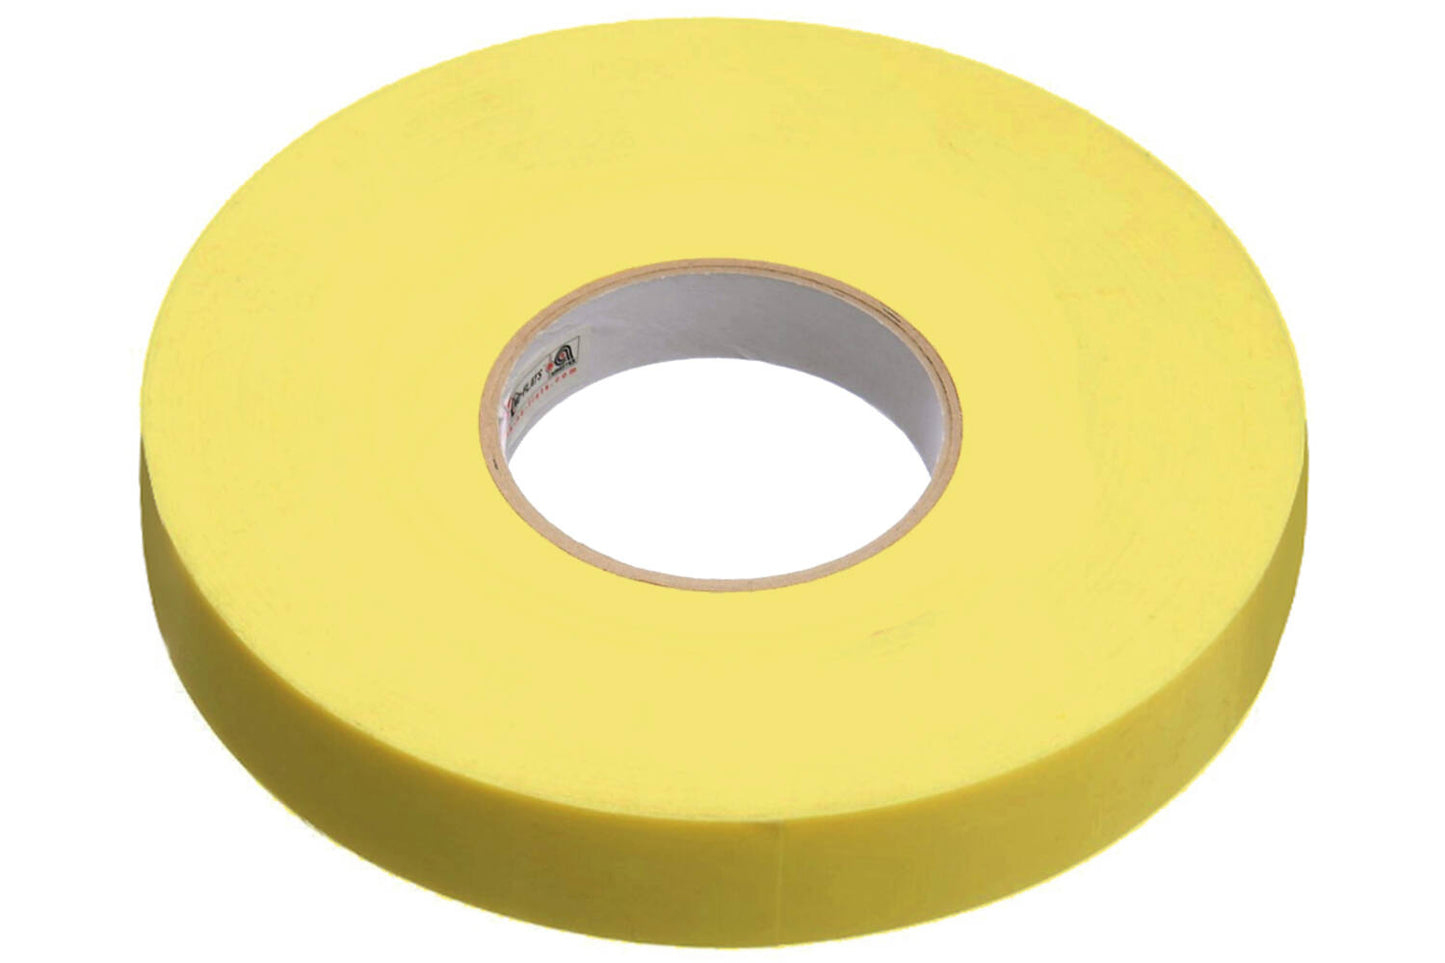 Joe's No Flats - Tubeless Rim Slint Yellow 29mm x 60m